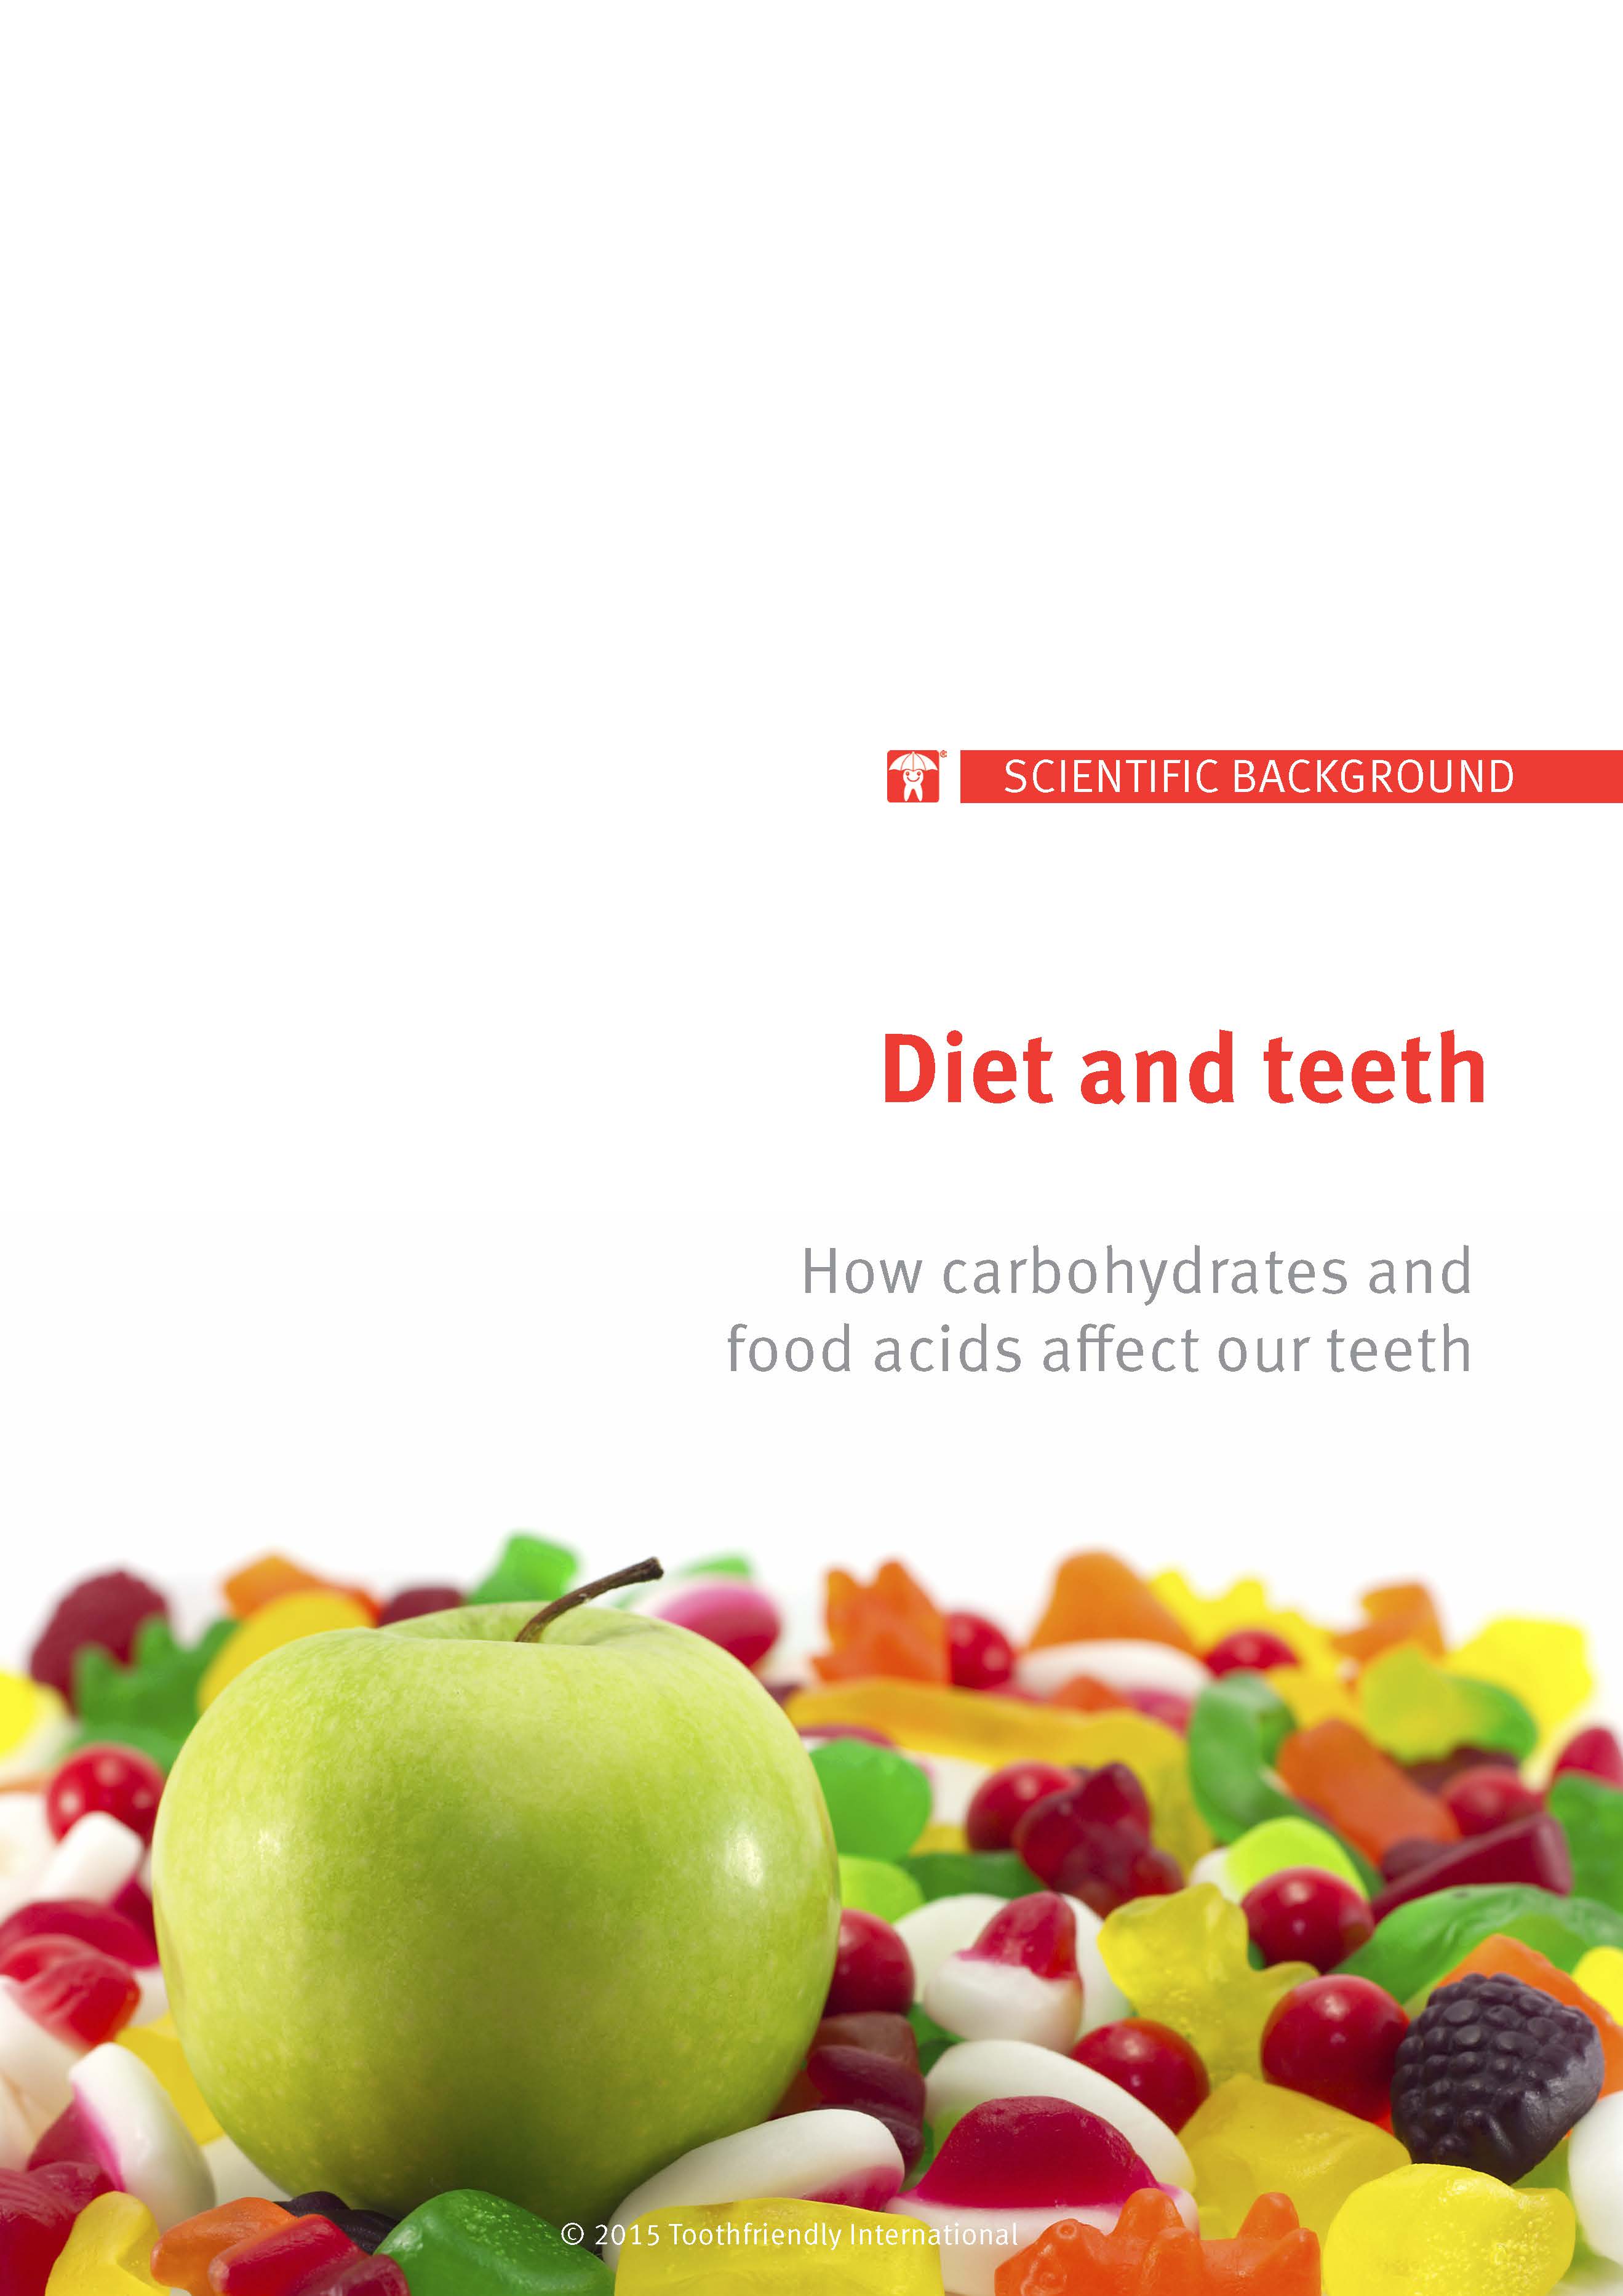 Diet and teeth